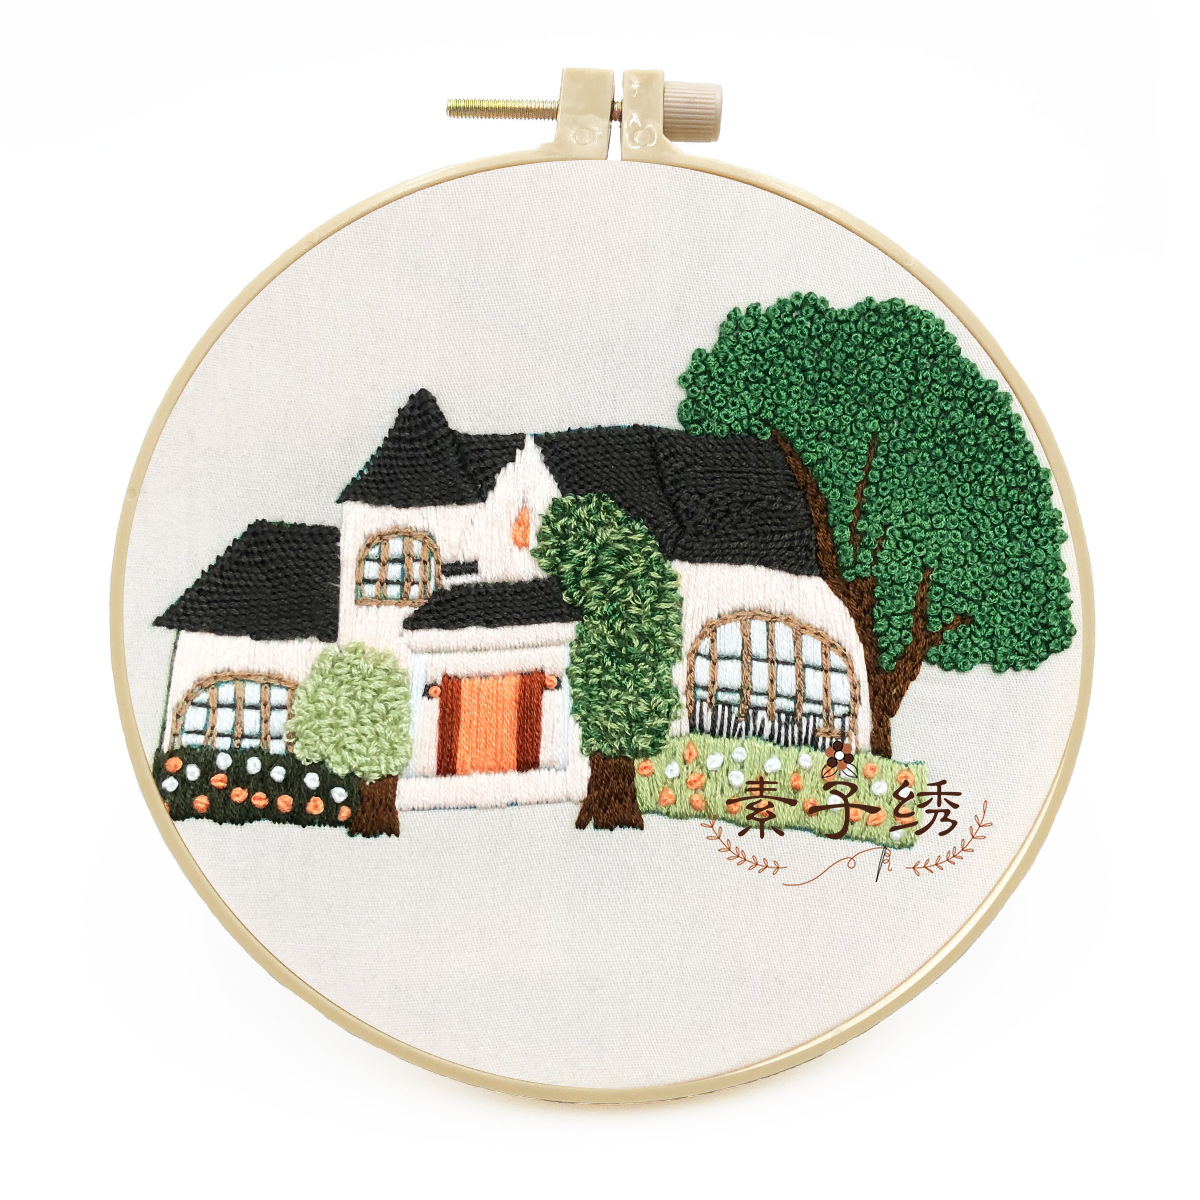 DIY Handmade Embroidery Cross stitch kit - Village House Pattern